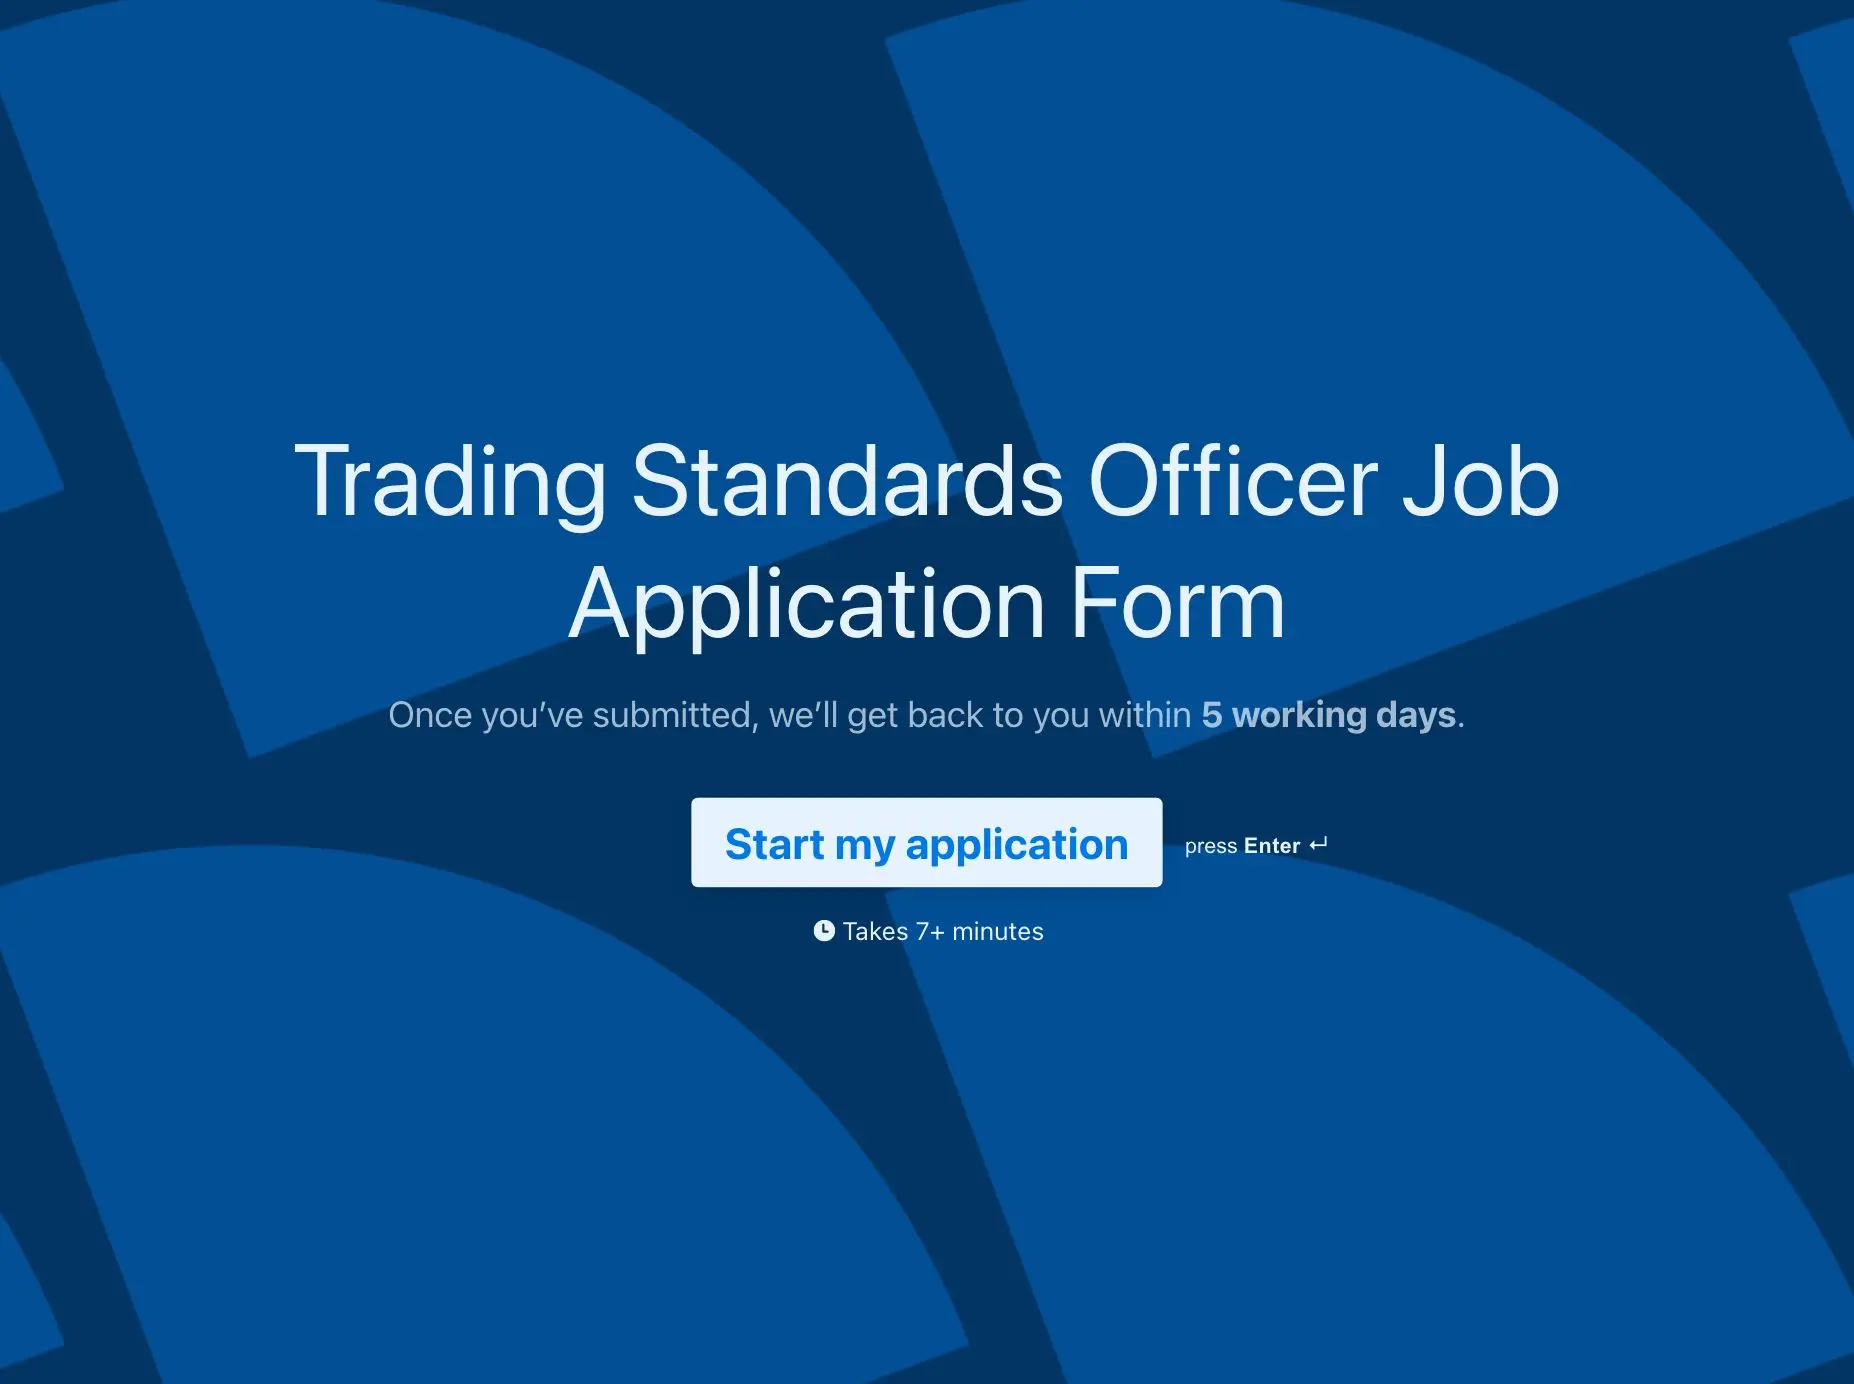 Trading Standards Officer Job Application Form Template Hero